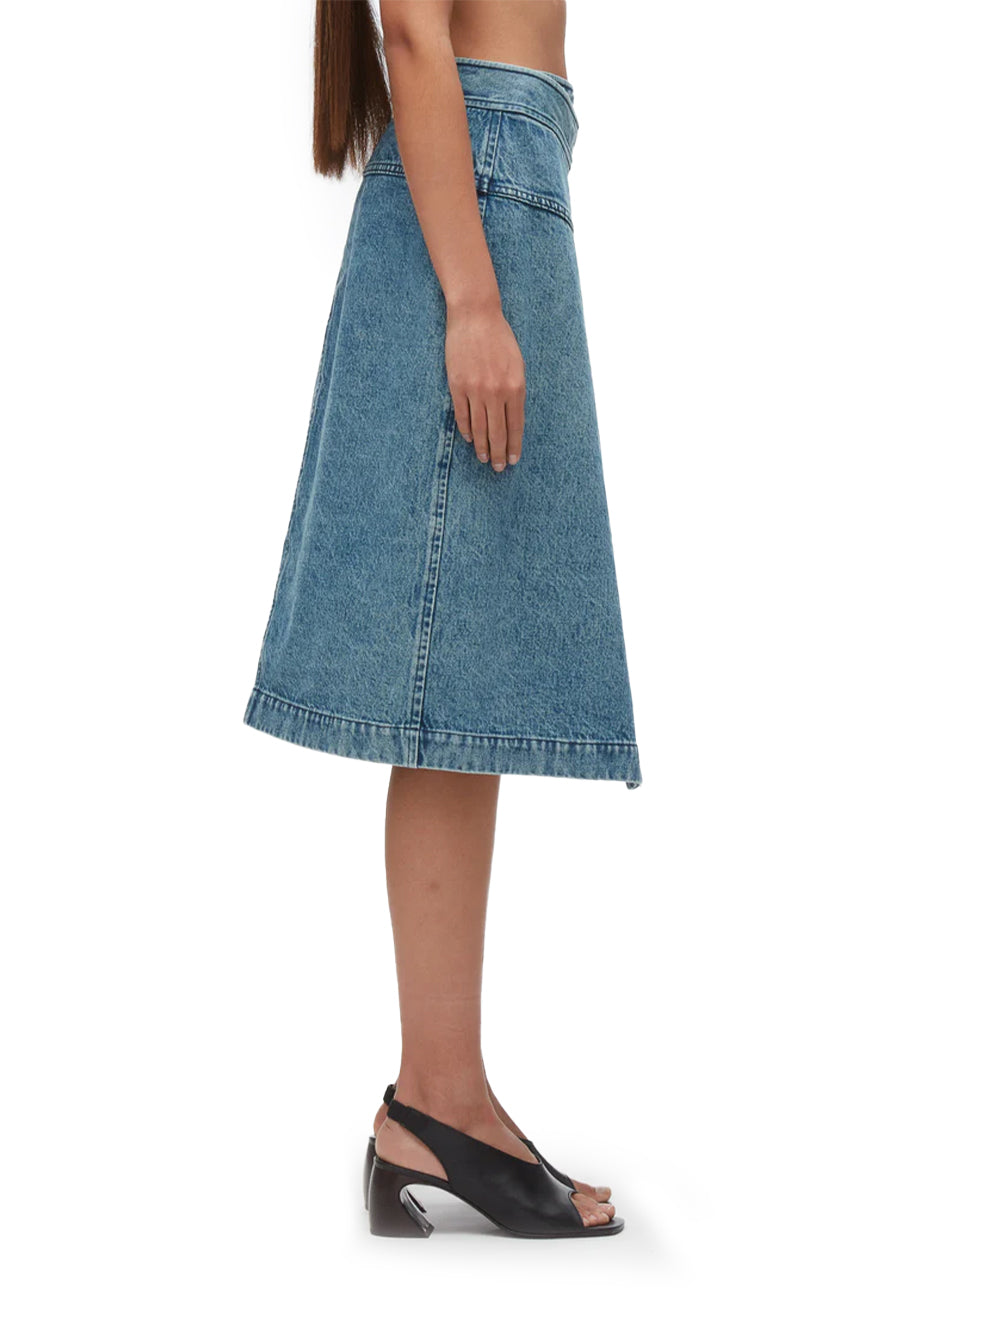 Denim Wrap Skirt (Blue)